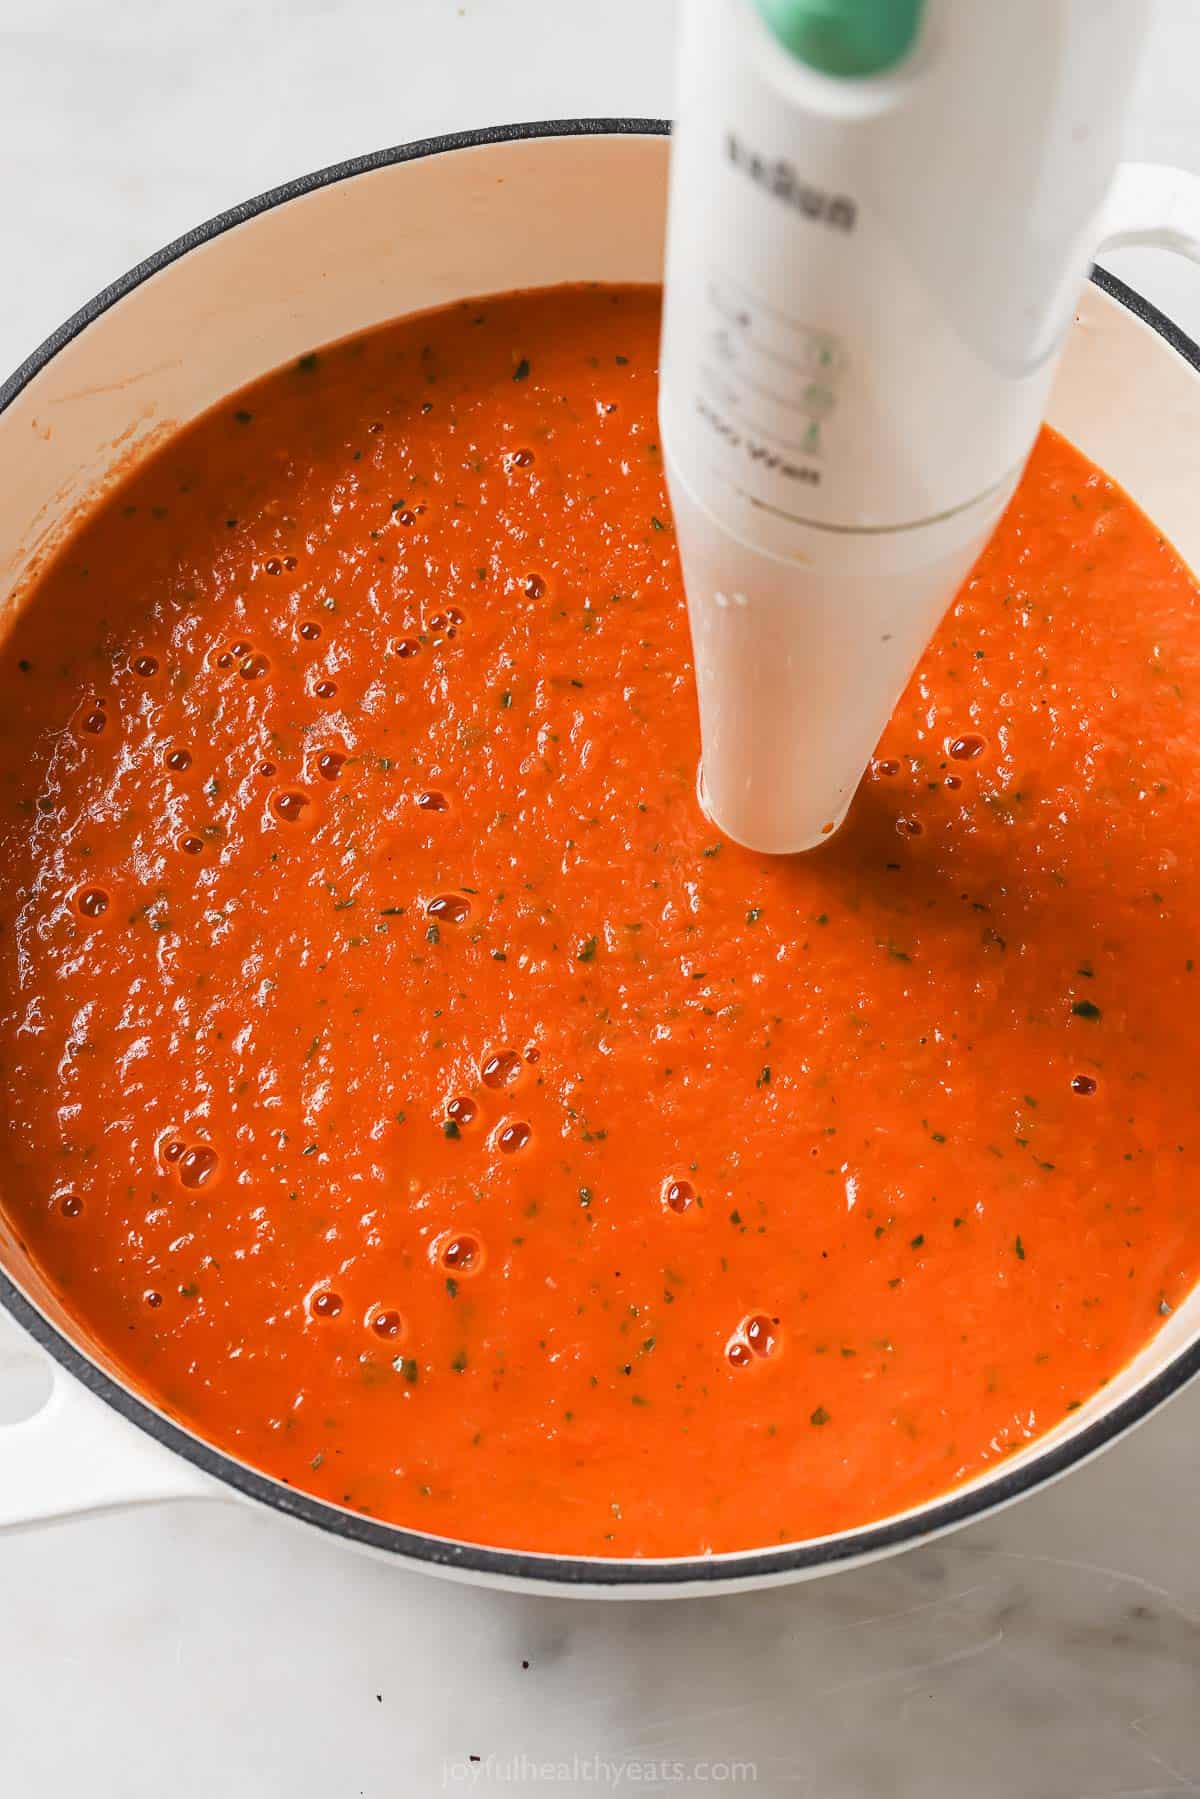 Stir the soup. 